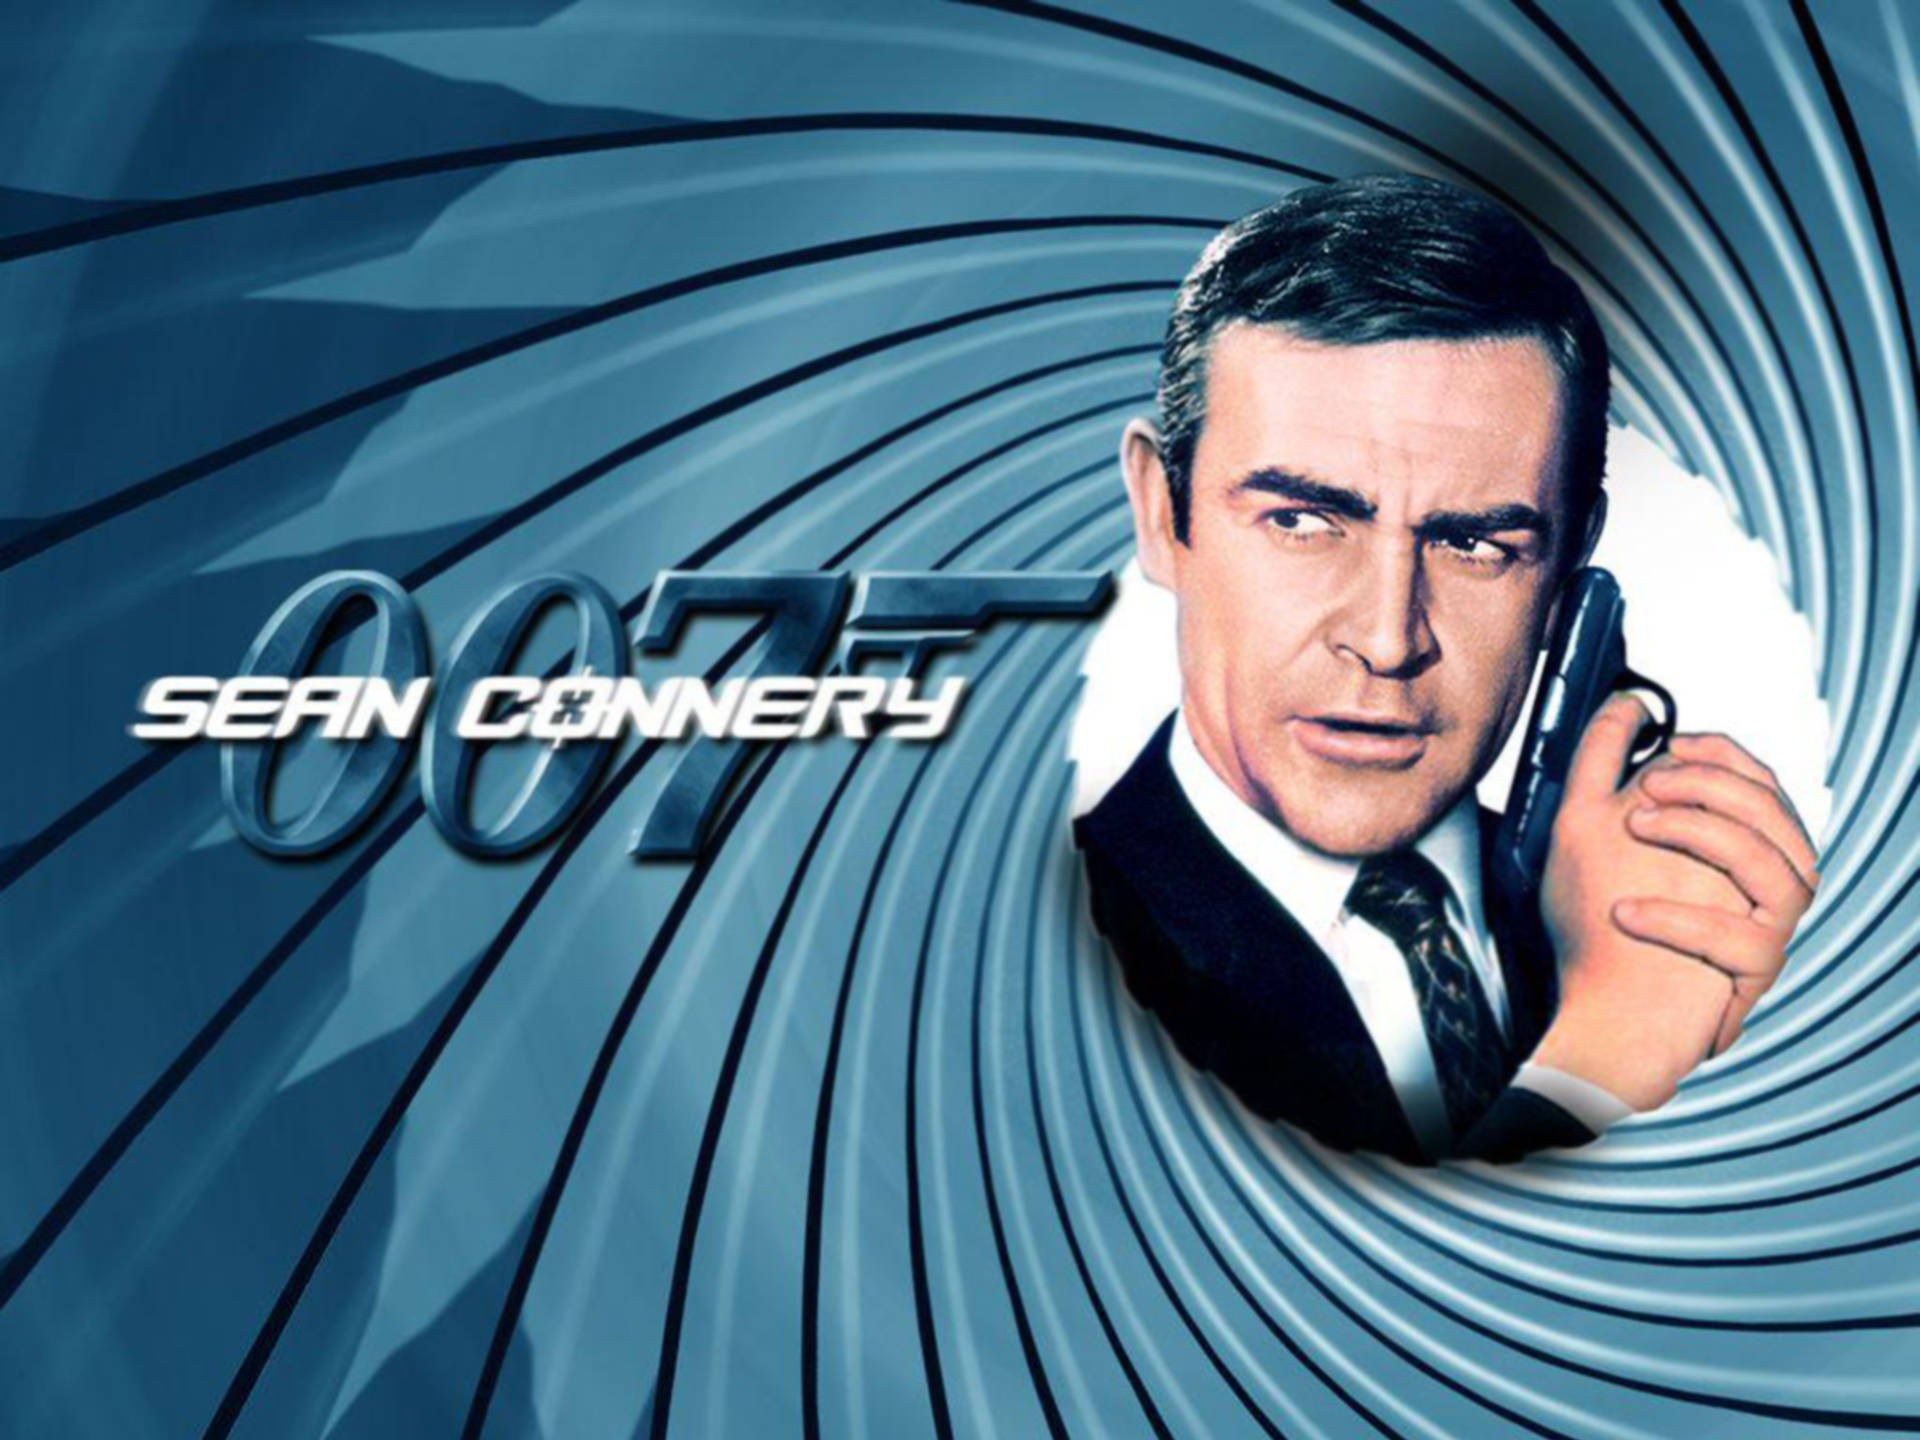 Sean Connery Digital Art Background